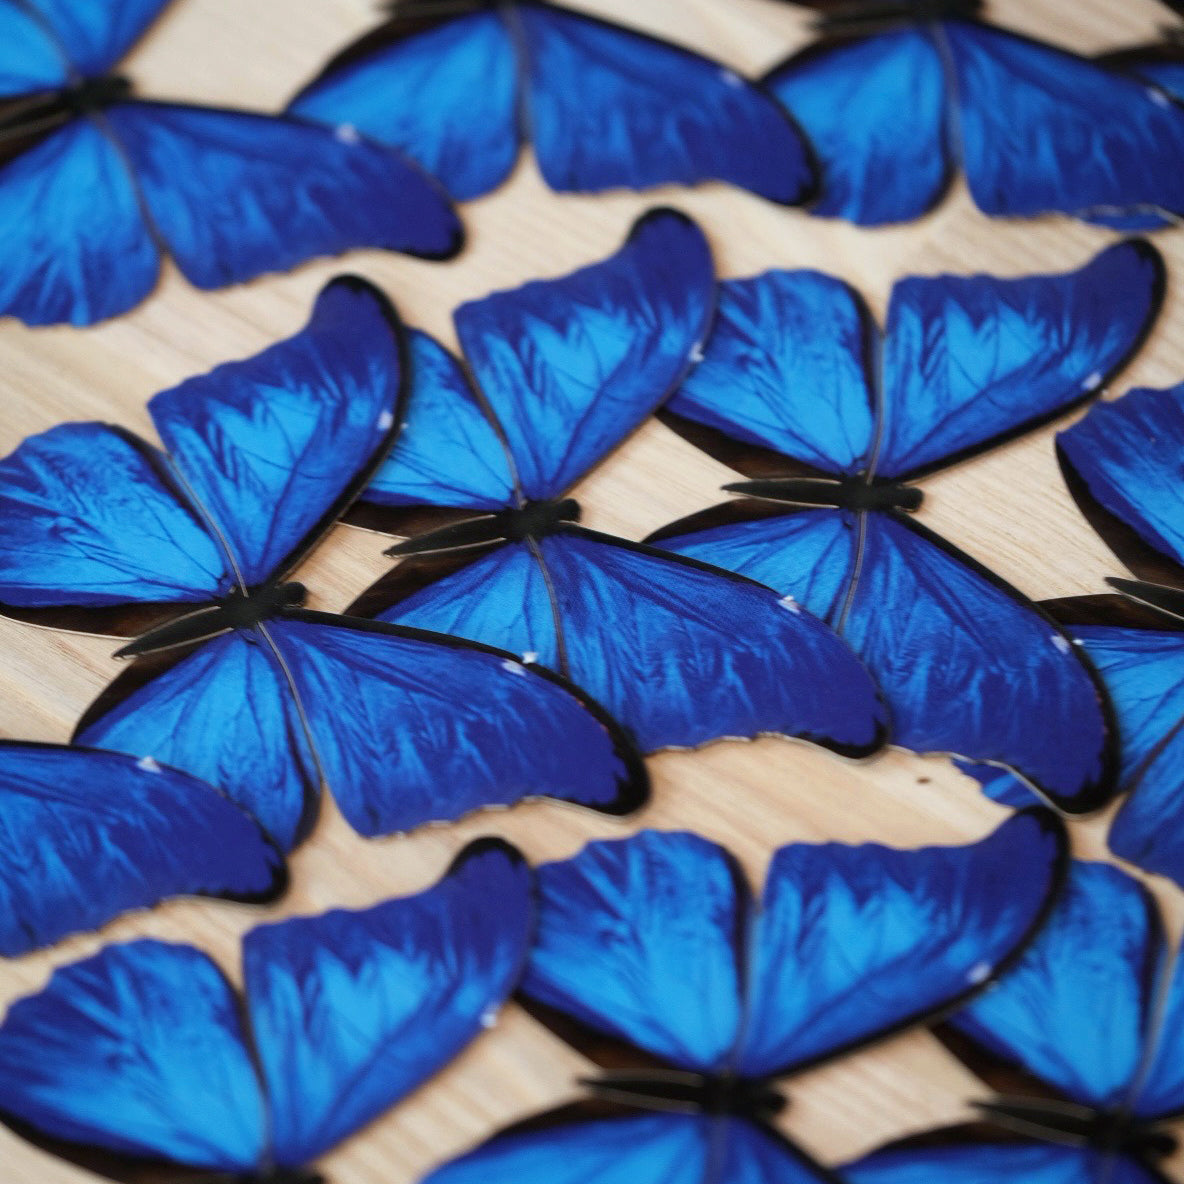 'Blue Morpho' Butterfly